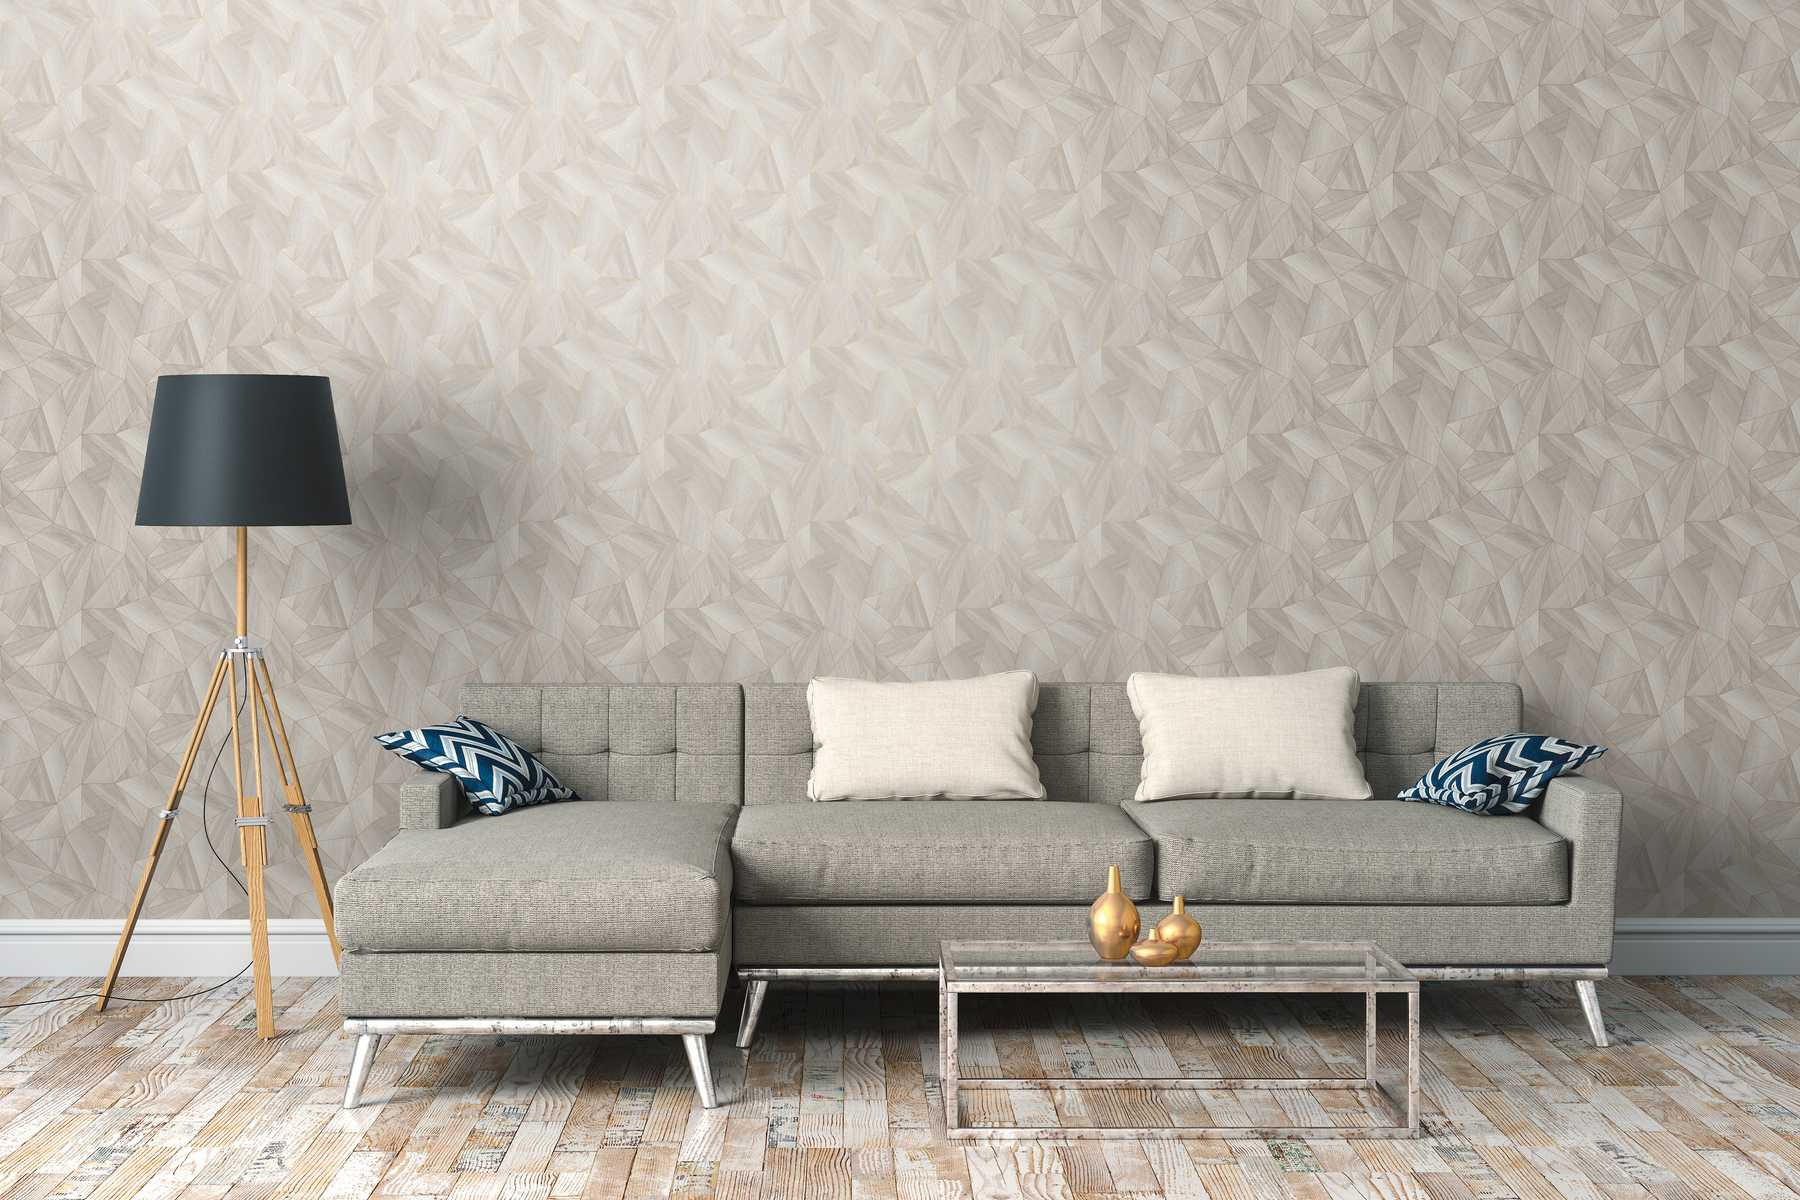             Wood look wallpaper modern design & metallic effect - grey, gold
        